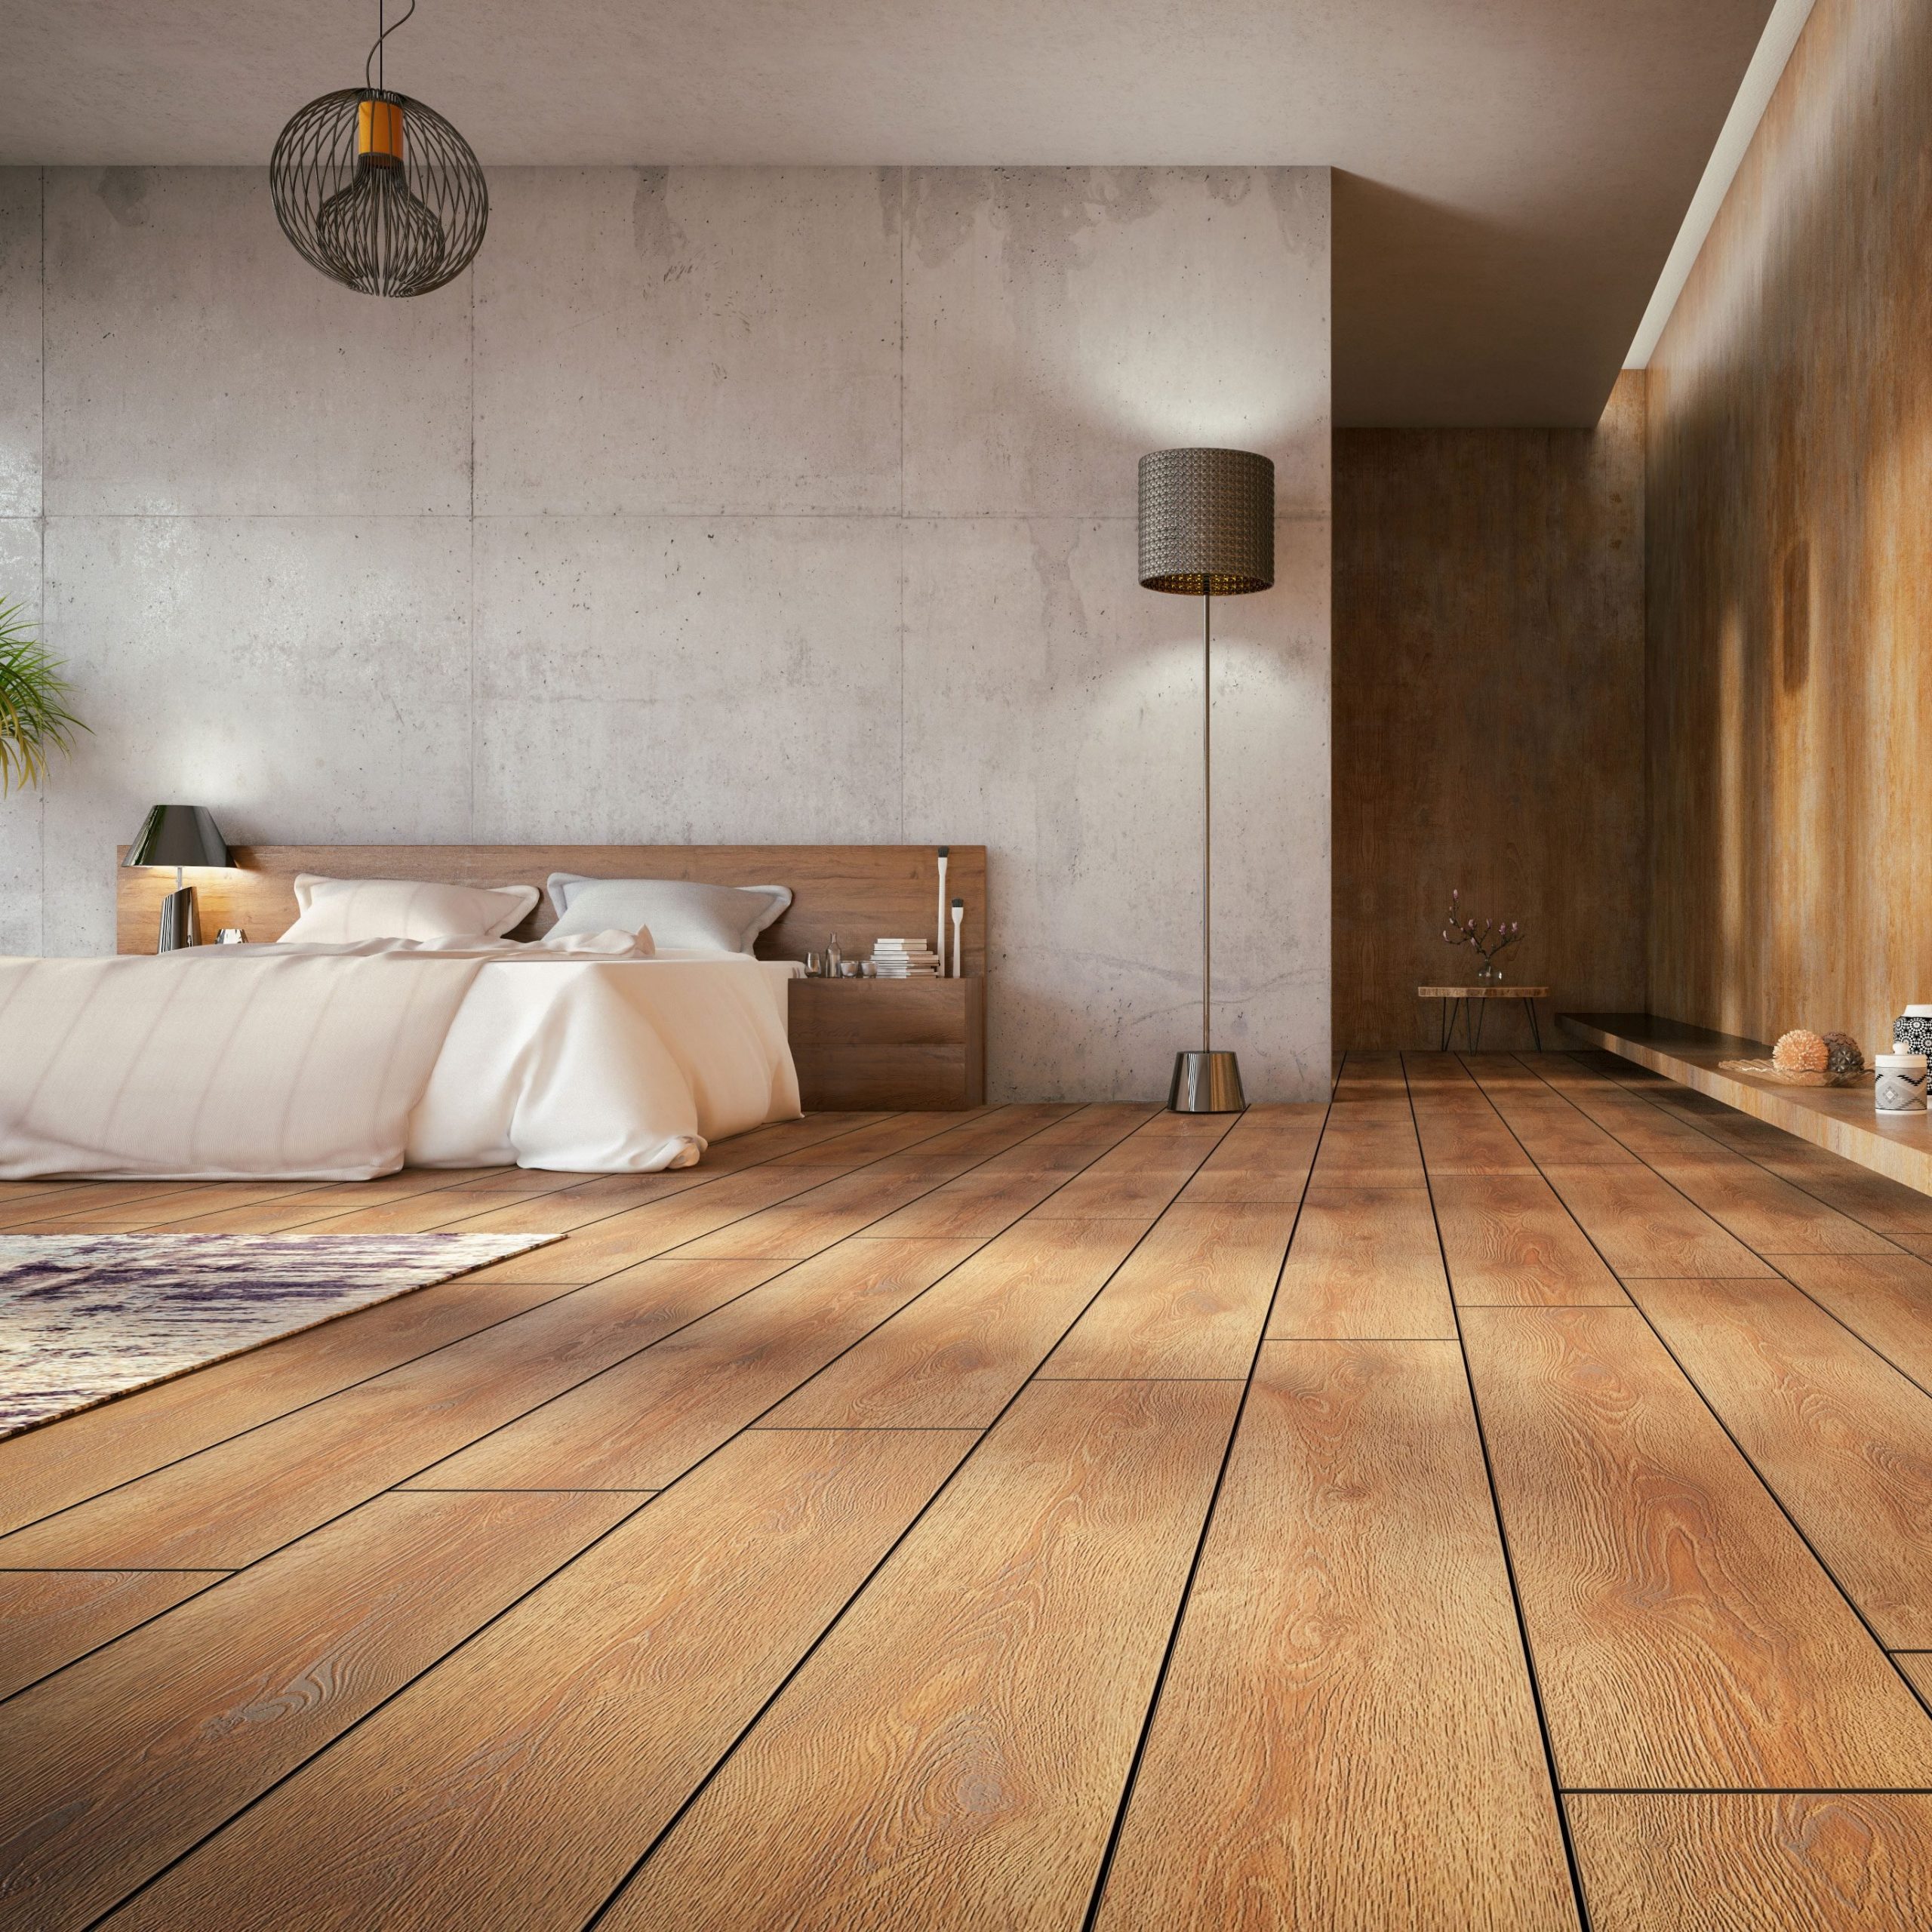 Bedroom Flooring Scaled, Design Authority